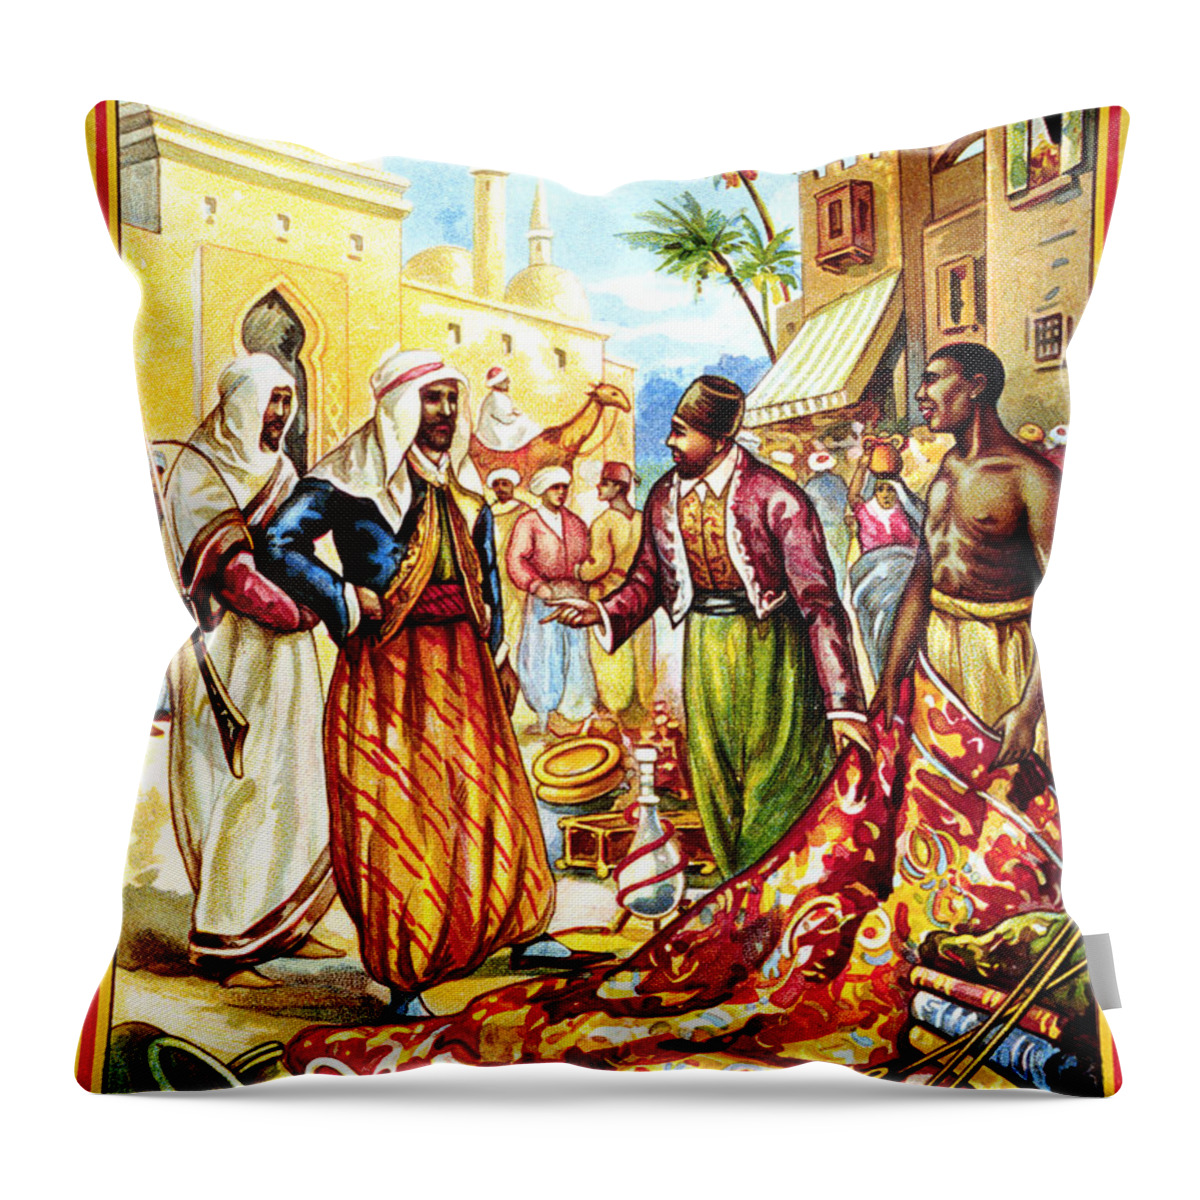 Arab Market Throw Pillow featuring the mixed media Street Scene in an Arab City - Arab Market - Persian Merchants - Vintage Advertising Poster by Studio Grafiikka